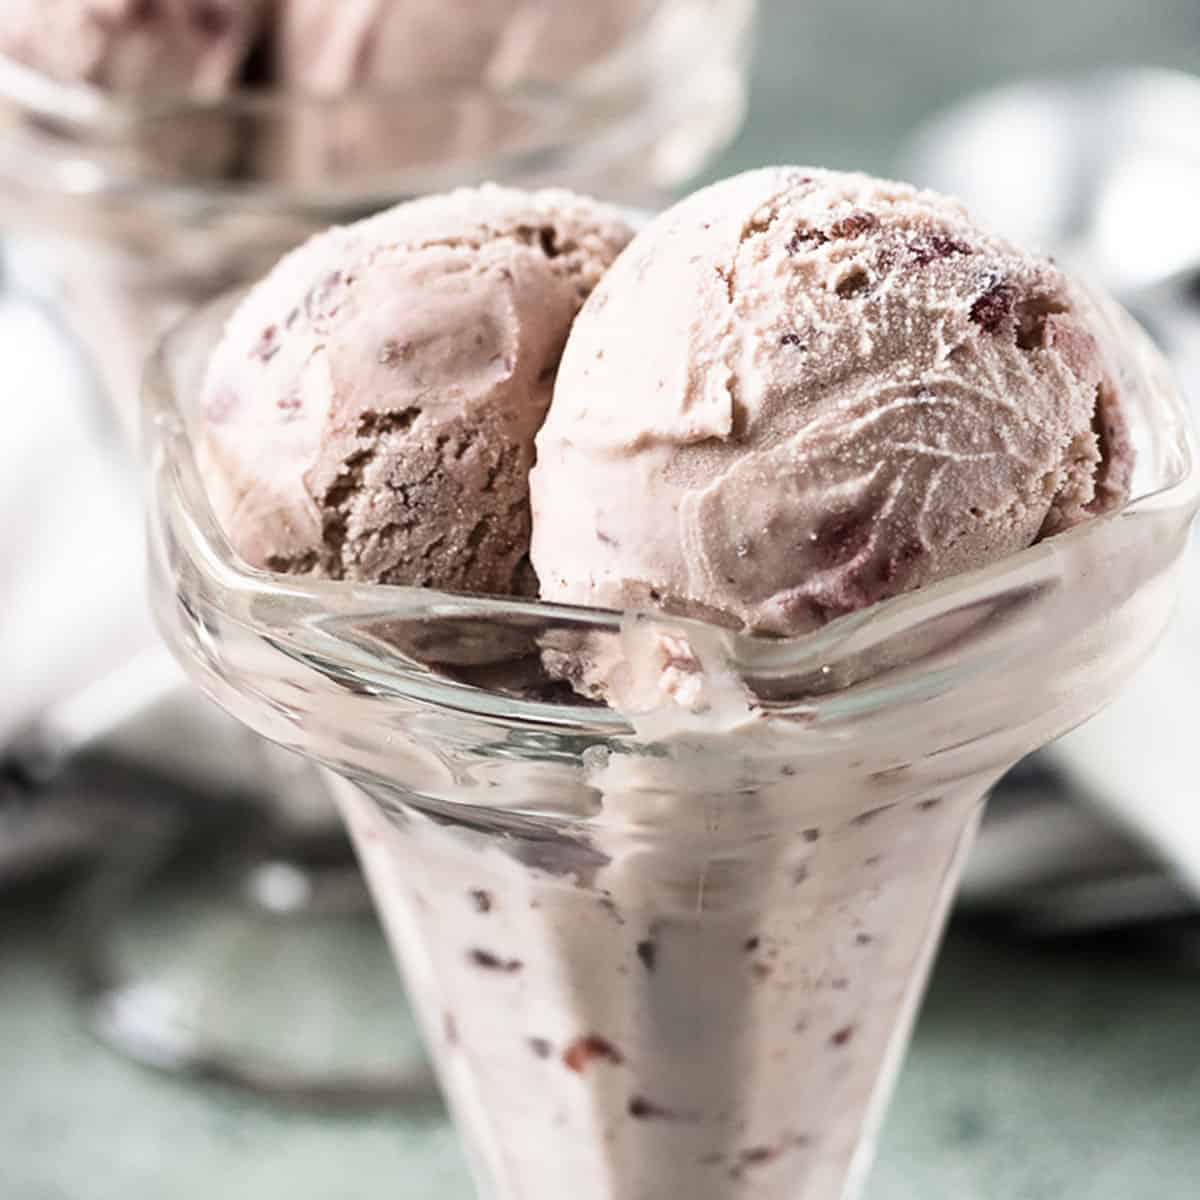 Scoops of cherry ice cream in a glass ice cream holder.